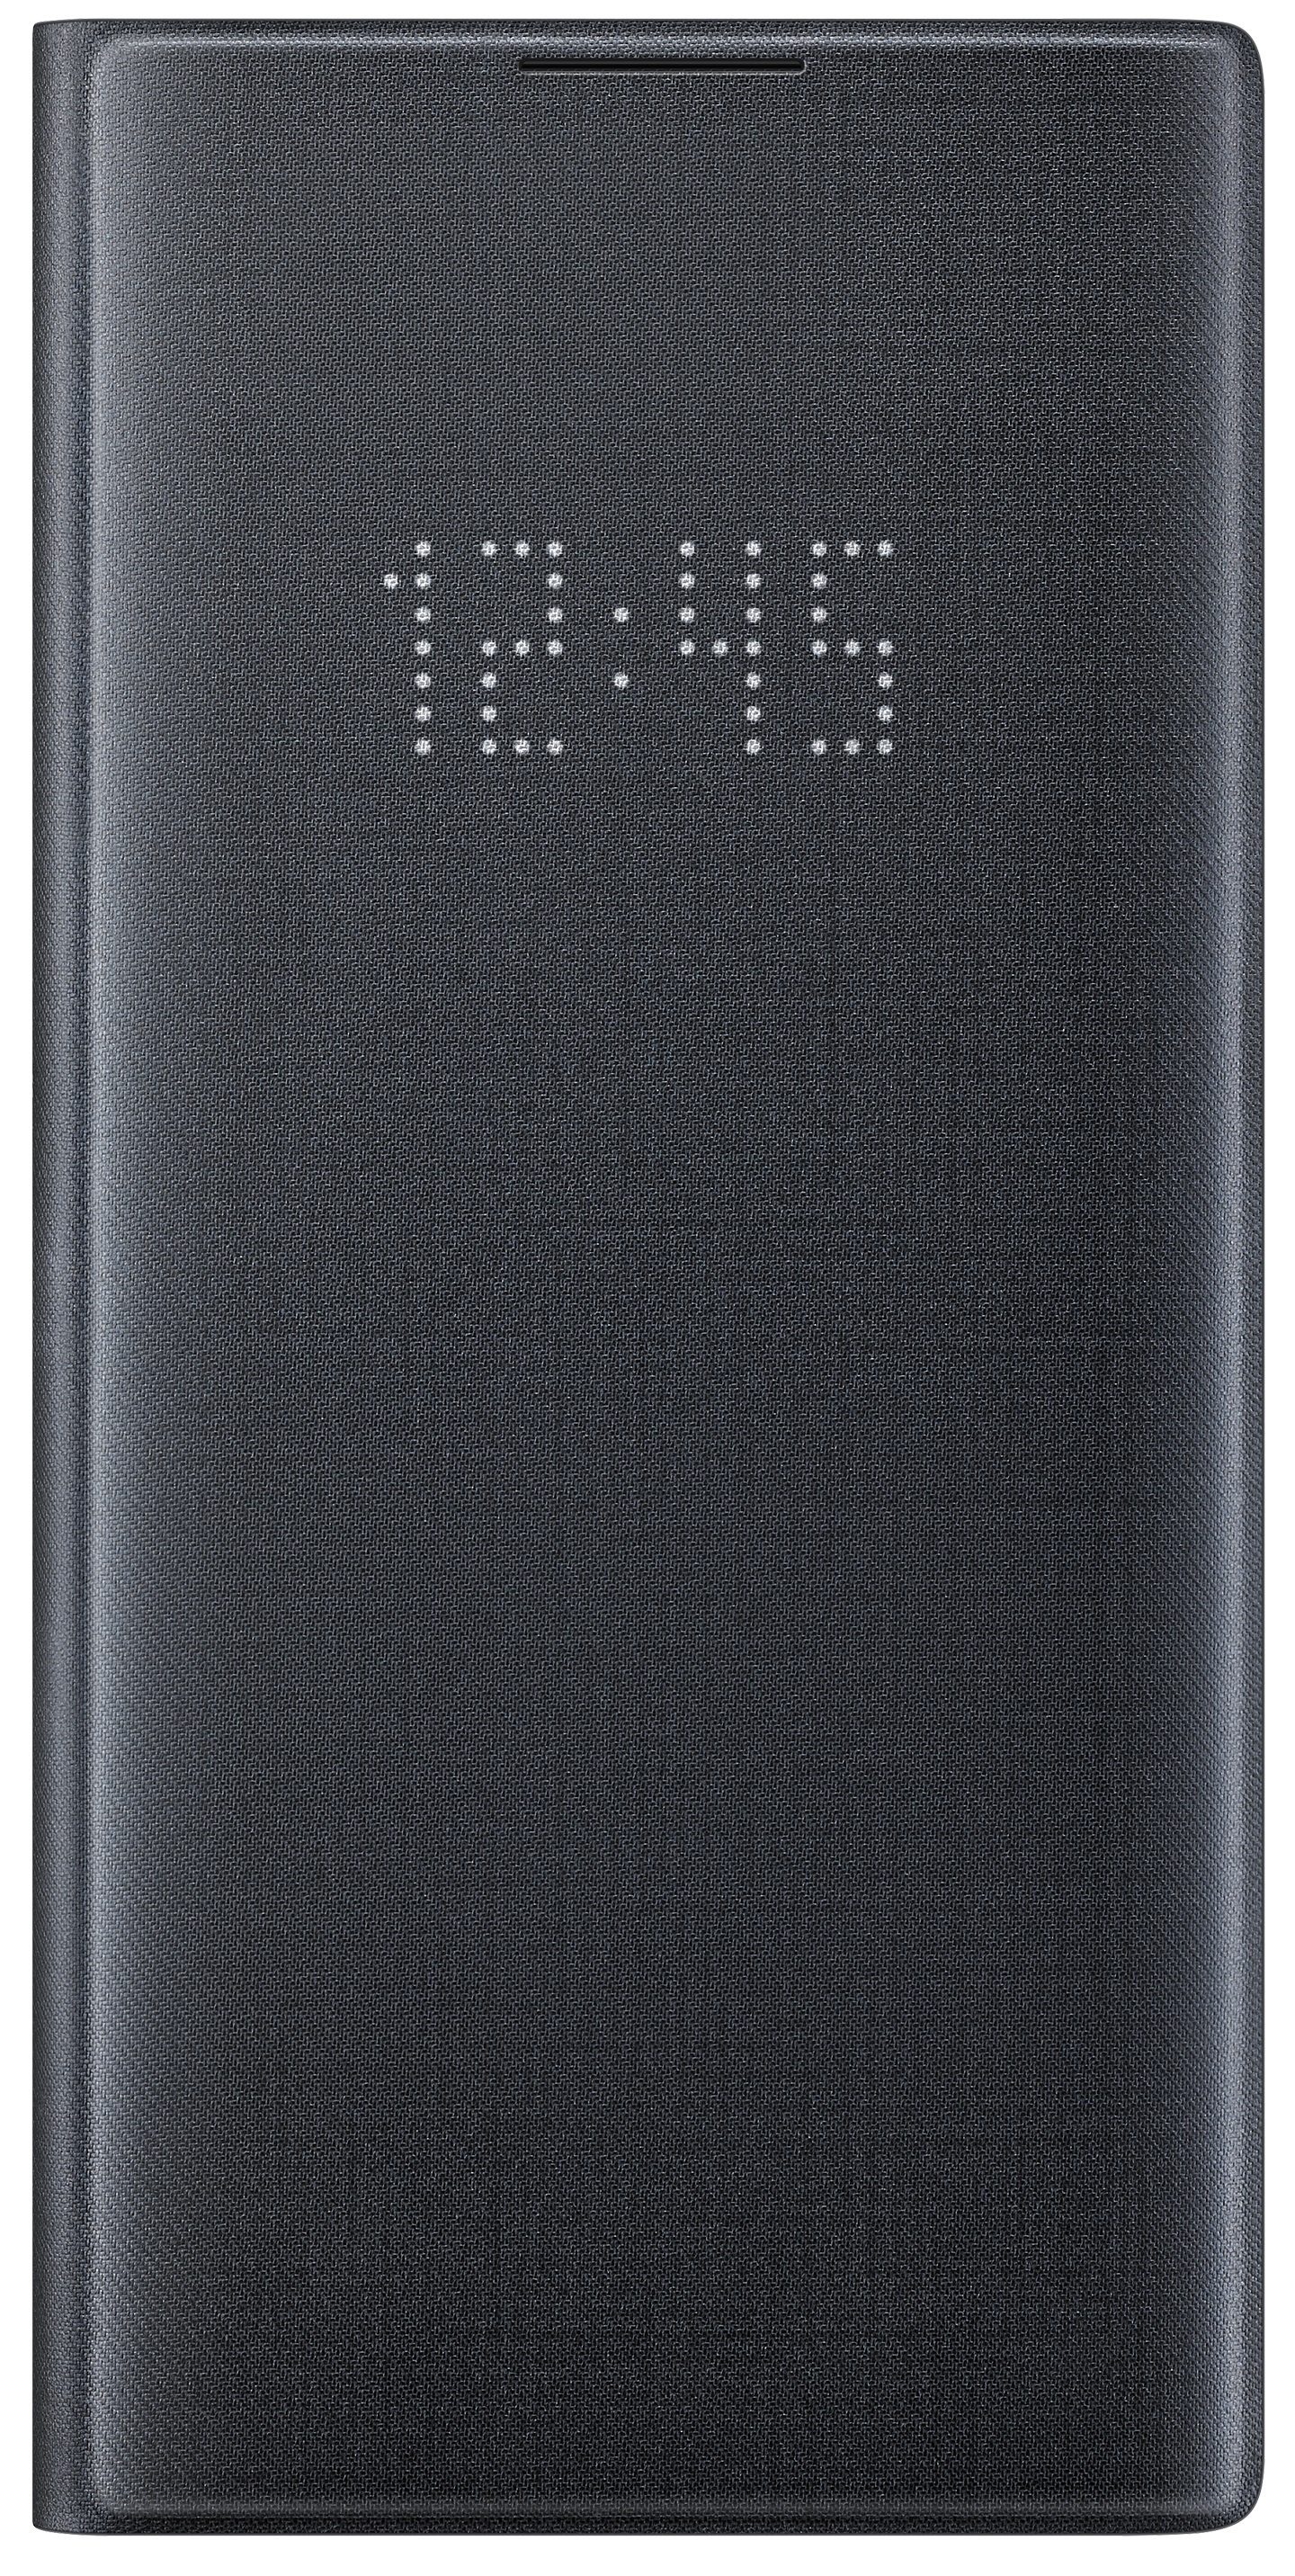 Акция на Чехол Samsung Galaxy Note 10 Plus LED View Cover Black (EF-NN975PBEGRU) от Eldorado